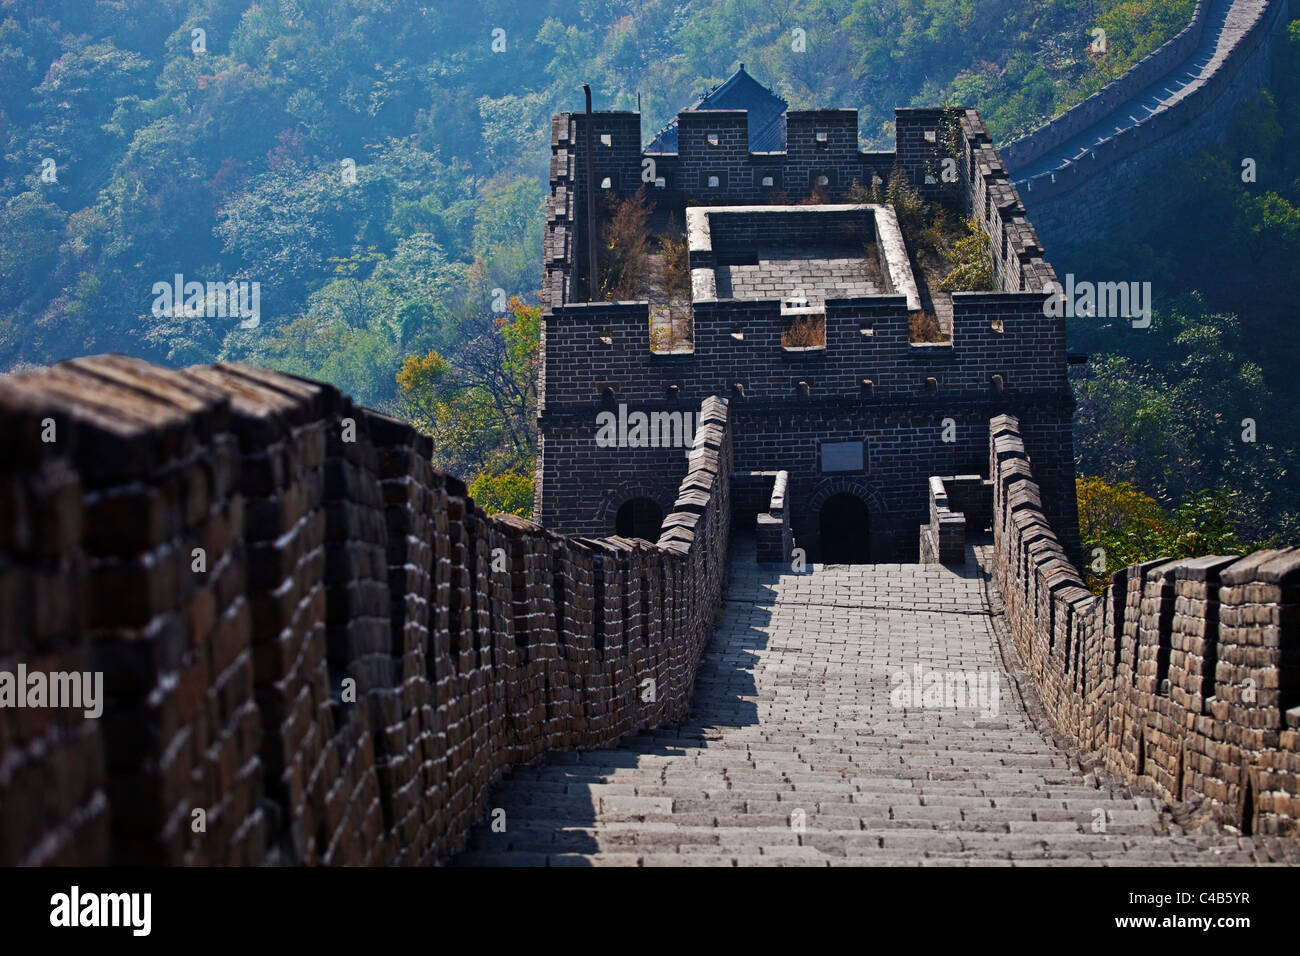 Watchtower on the Mutianyu section of the Great Wall of China, Mutianyu, Jiaojiehe, Beijing, China. Stock Photo